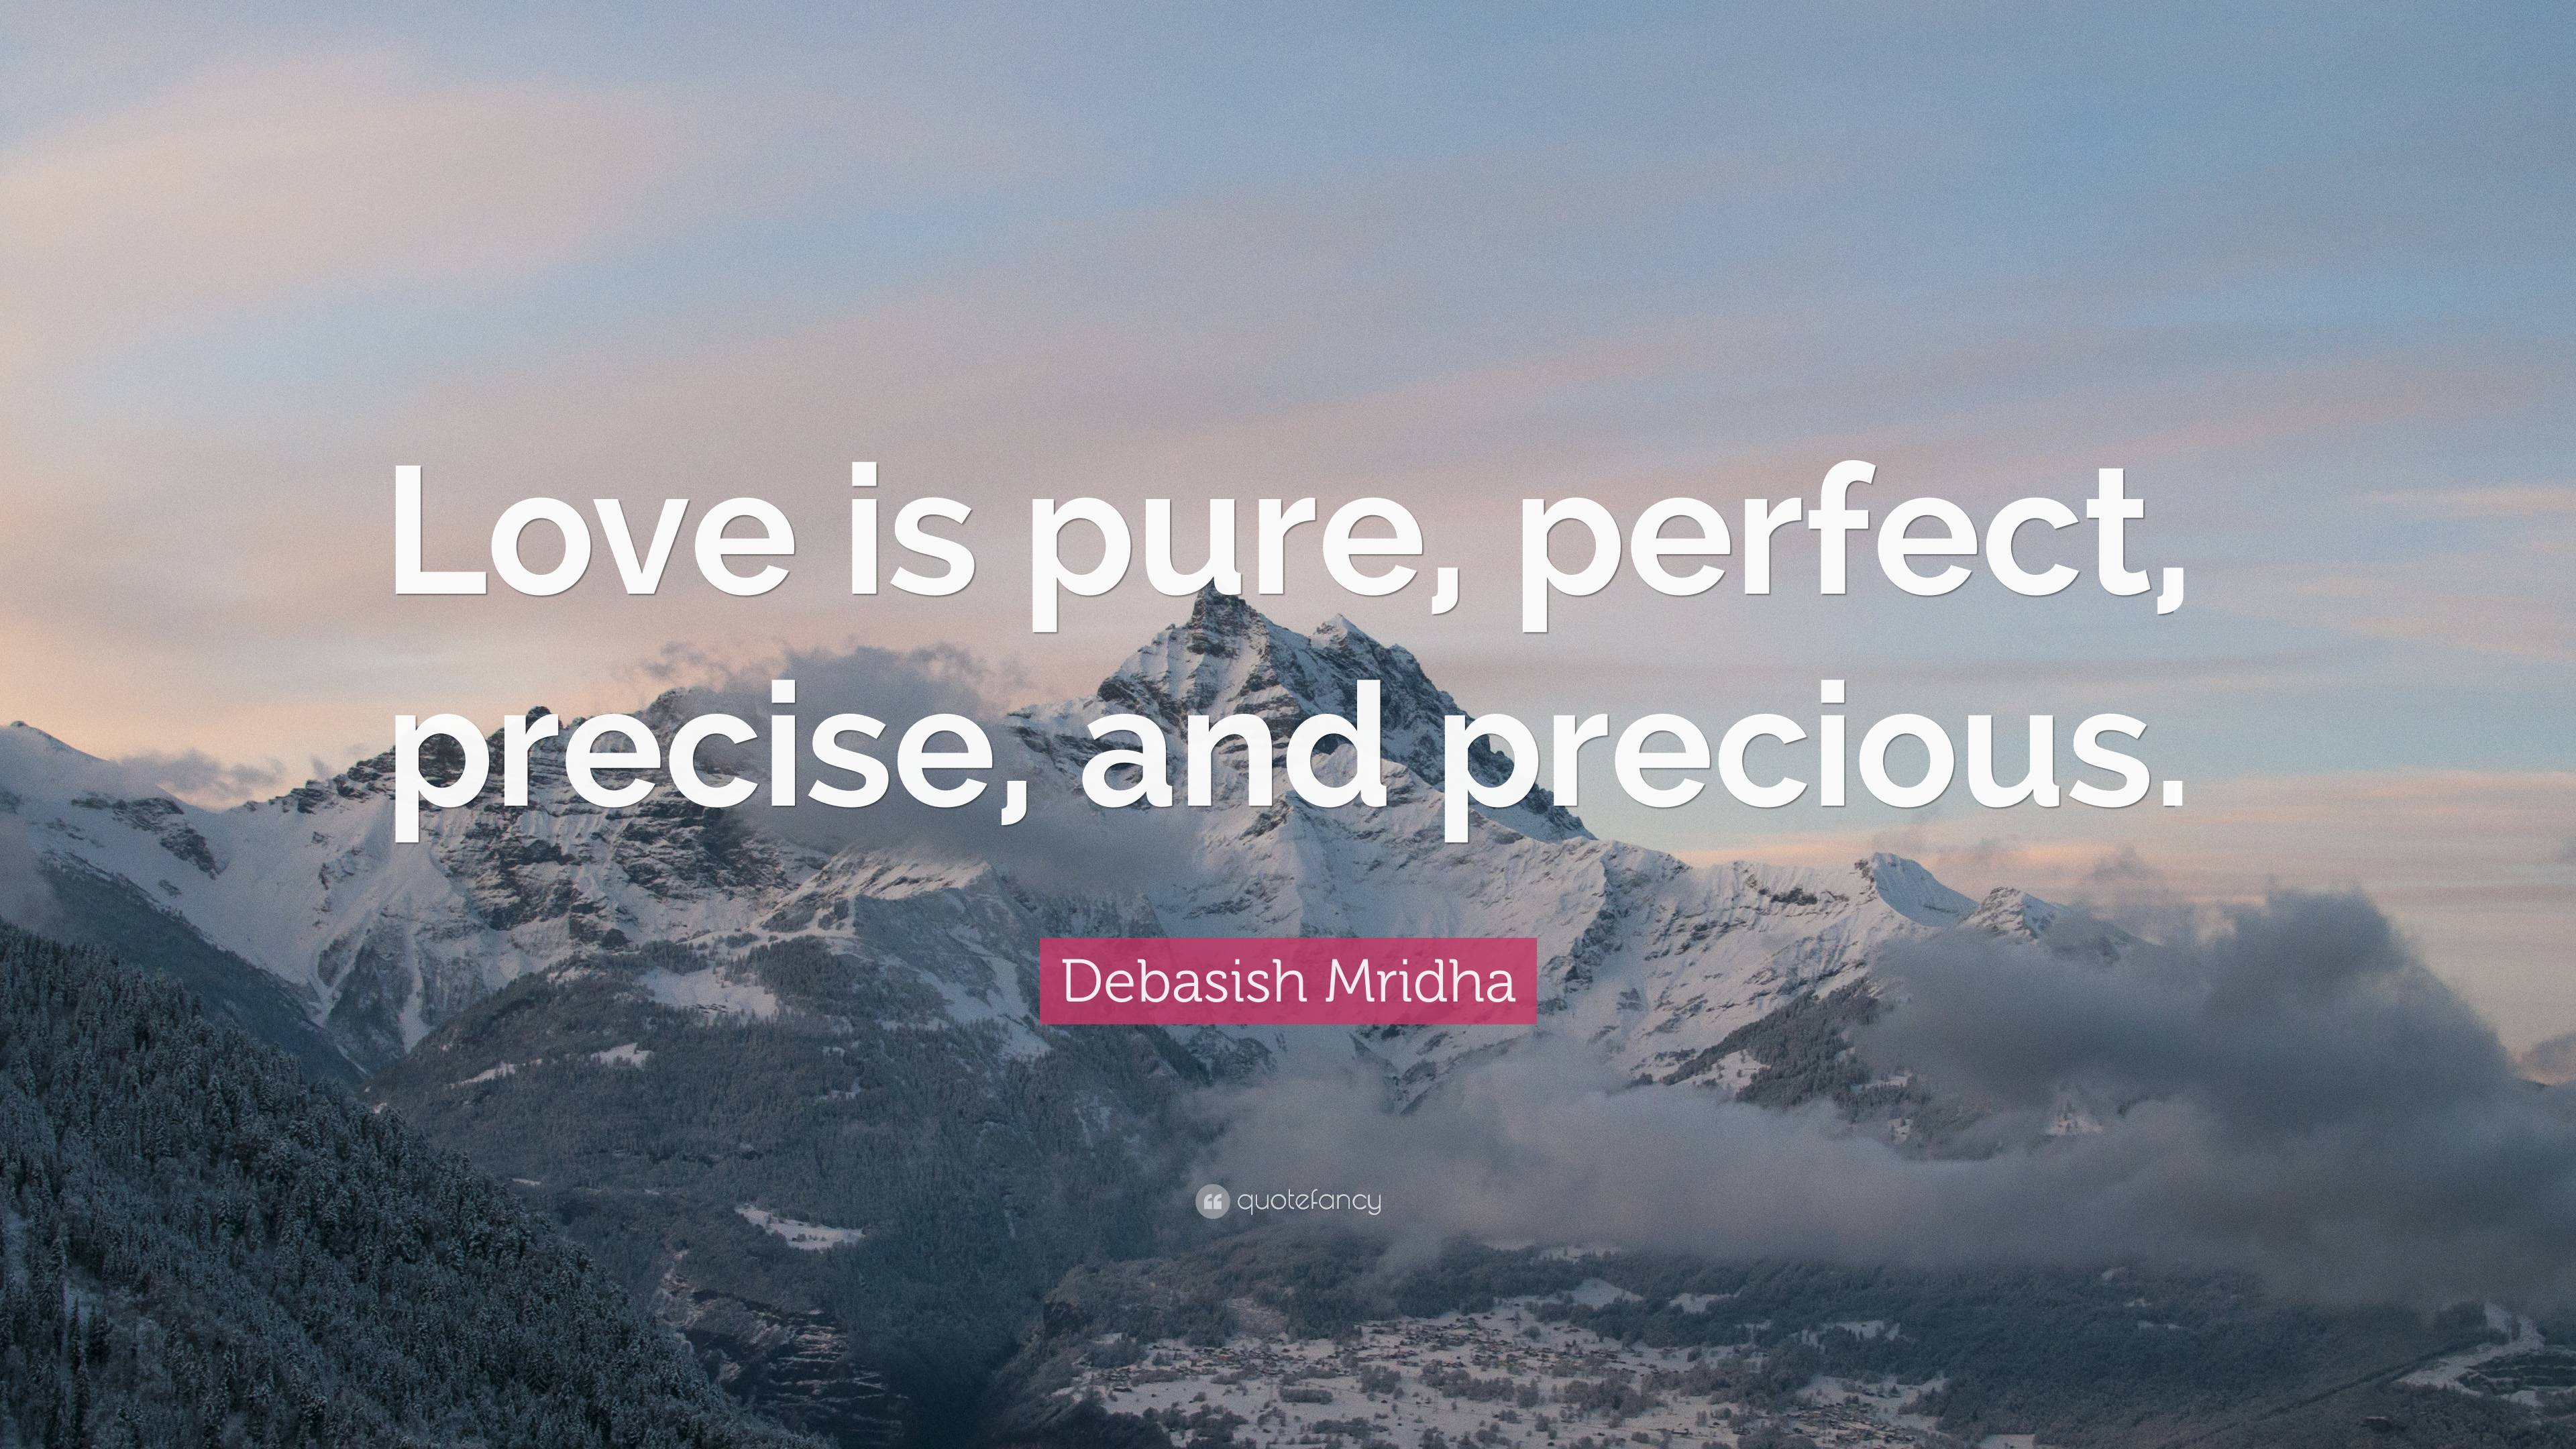 Debasish Mridha Quote: “Love is pure, perfect, precise, and precious.”